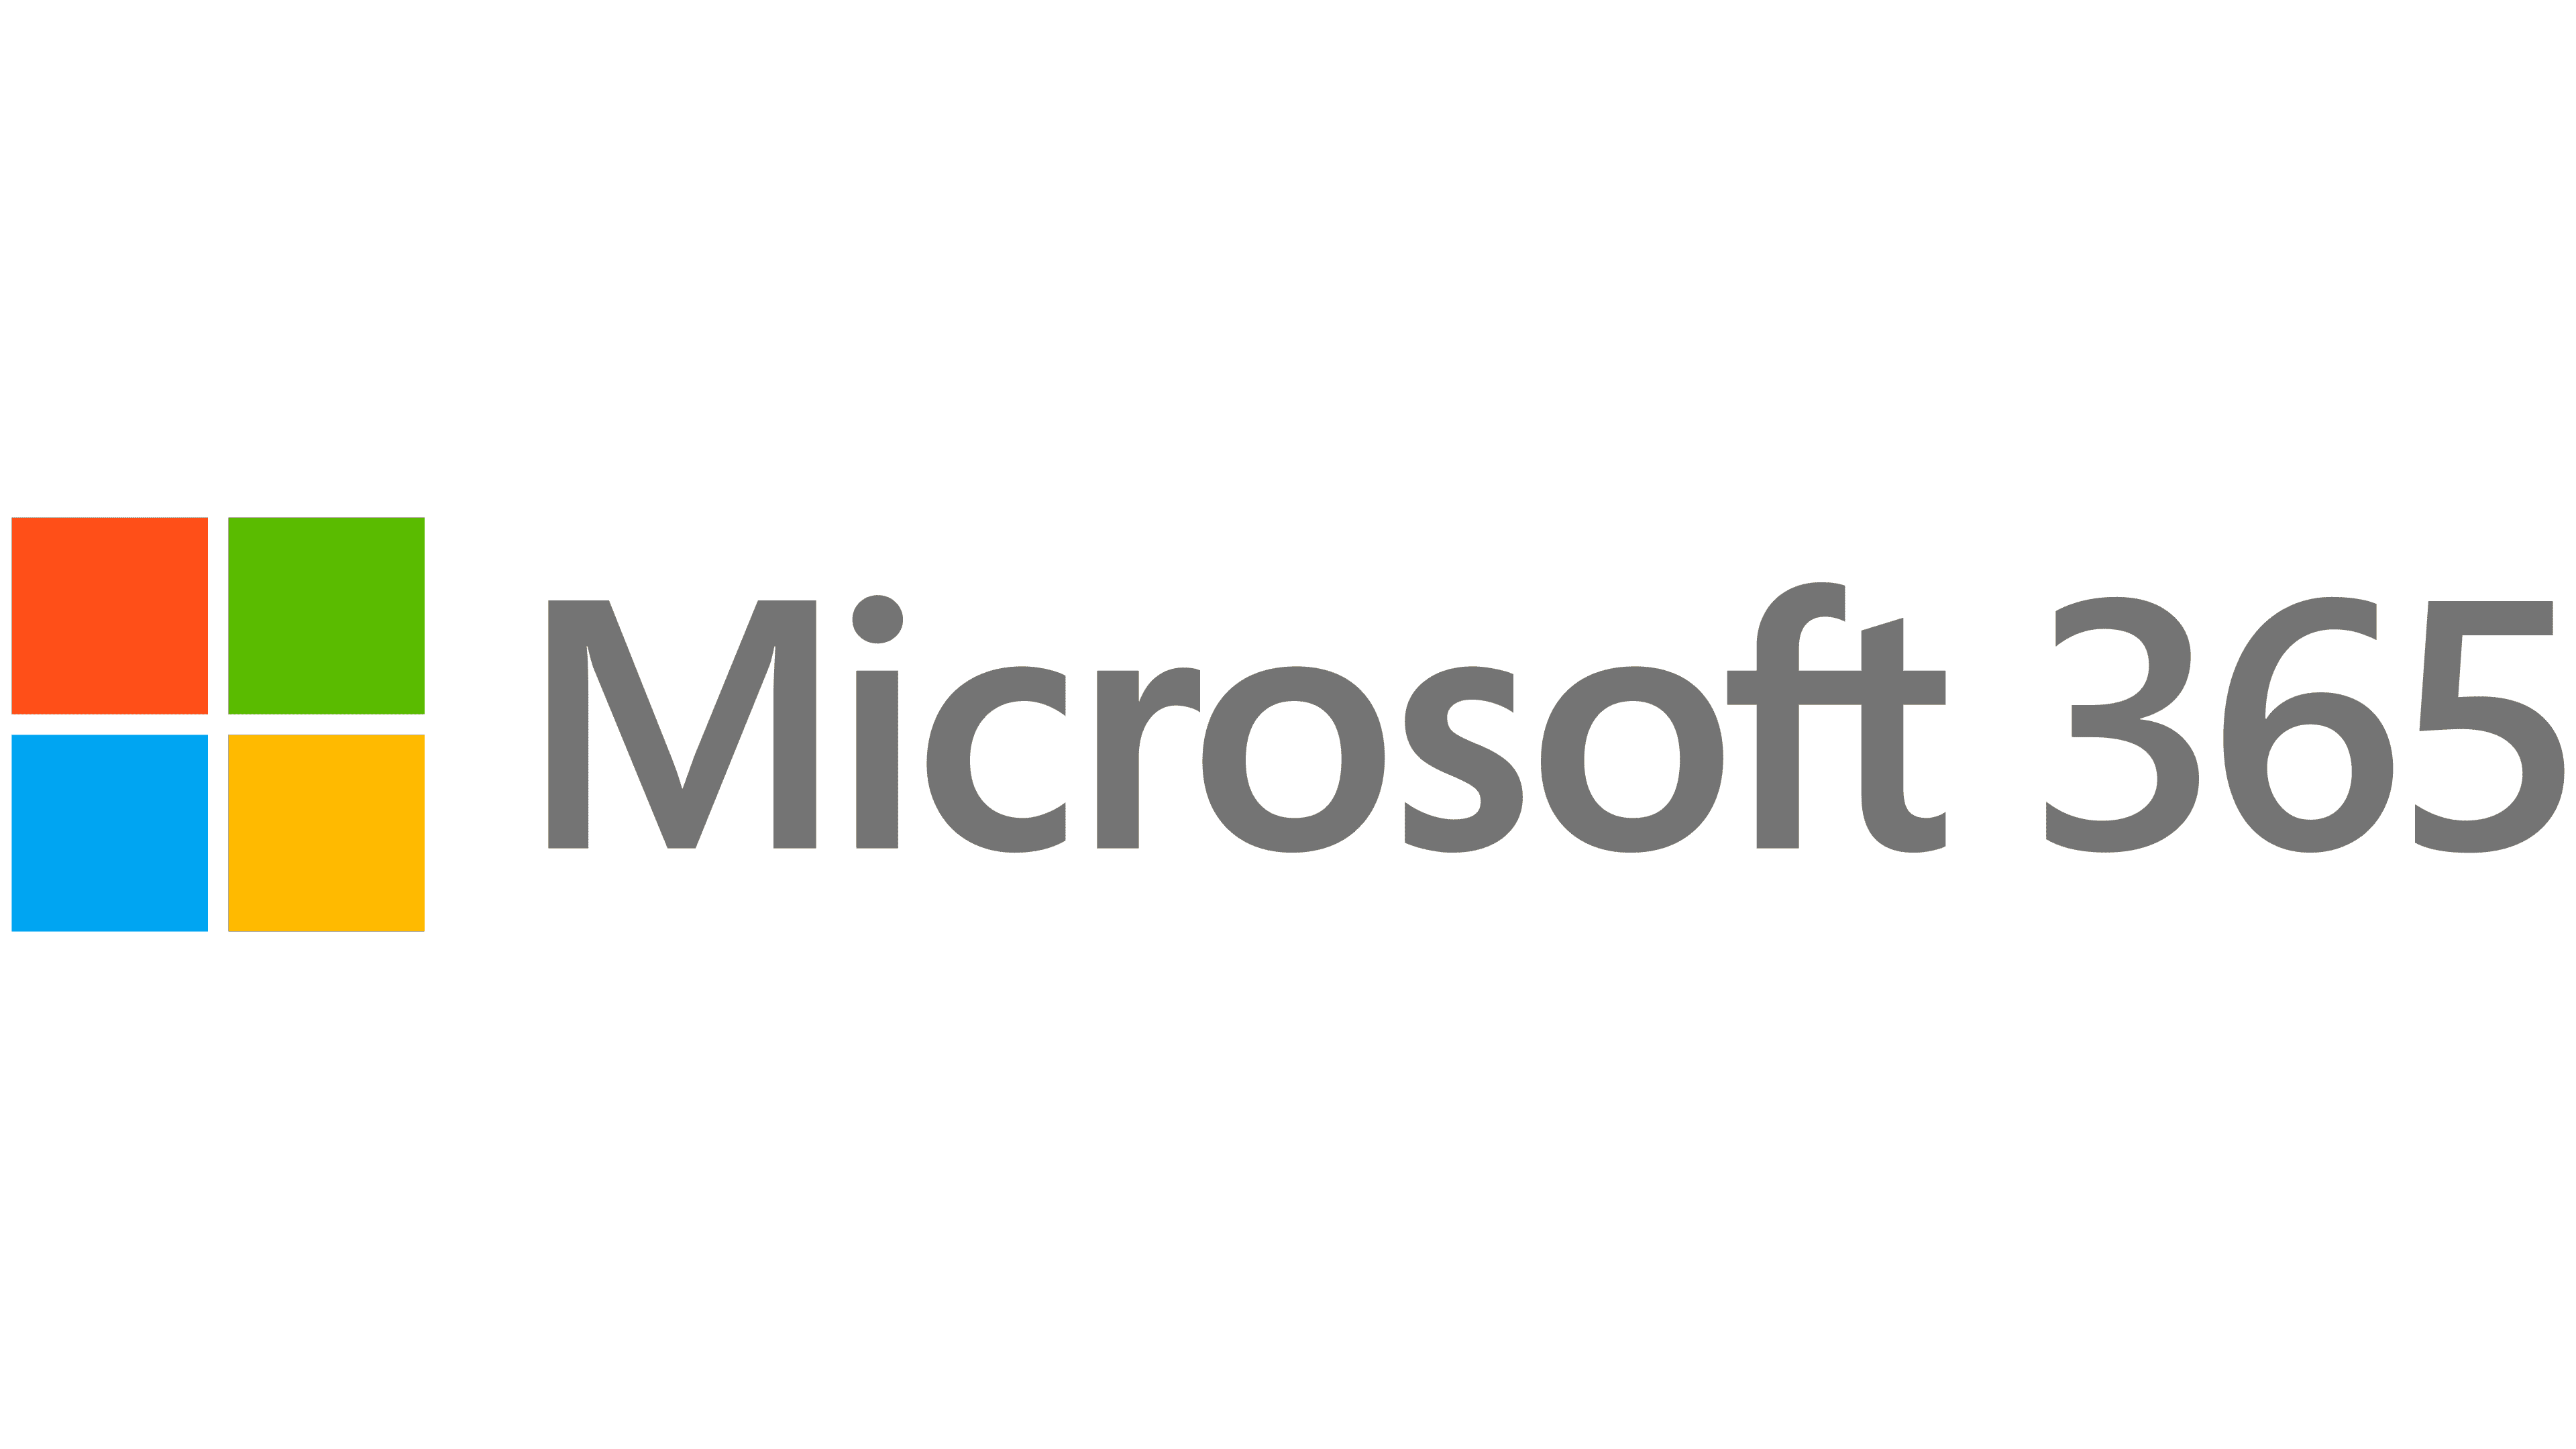 Build on Microsoft 365